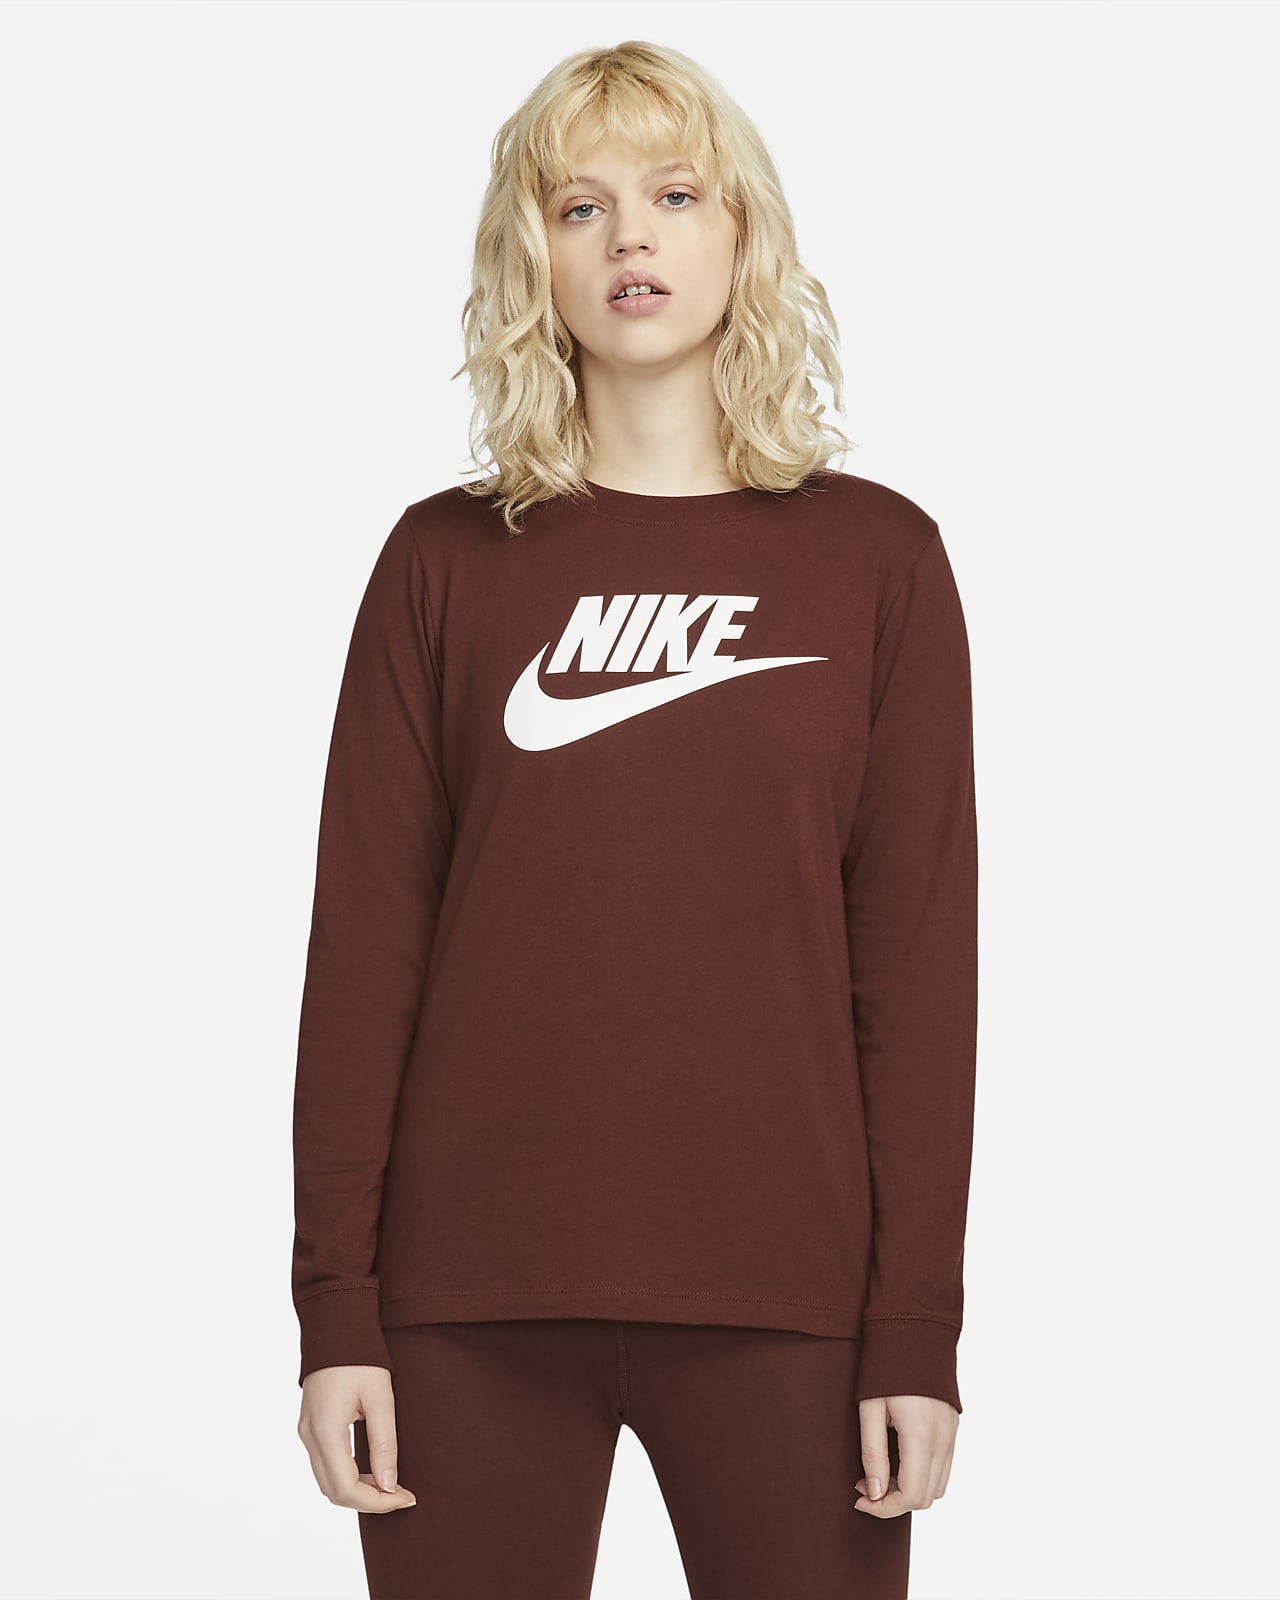 Nike Sportswear Langarm-T-Shirt für Damen